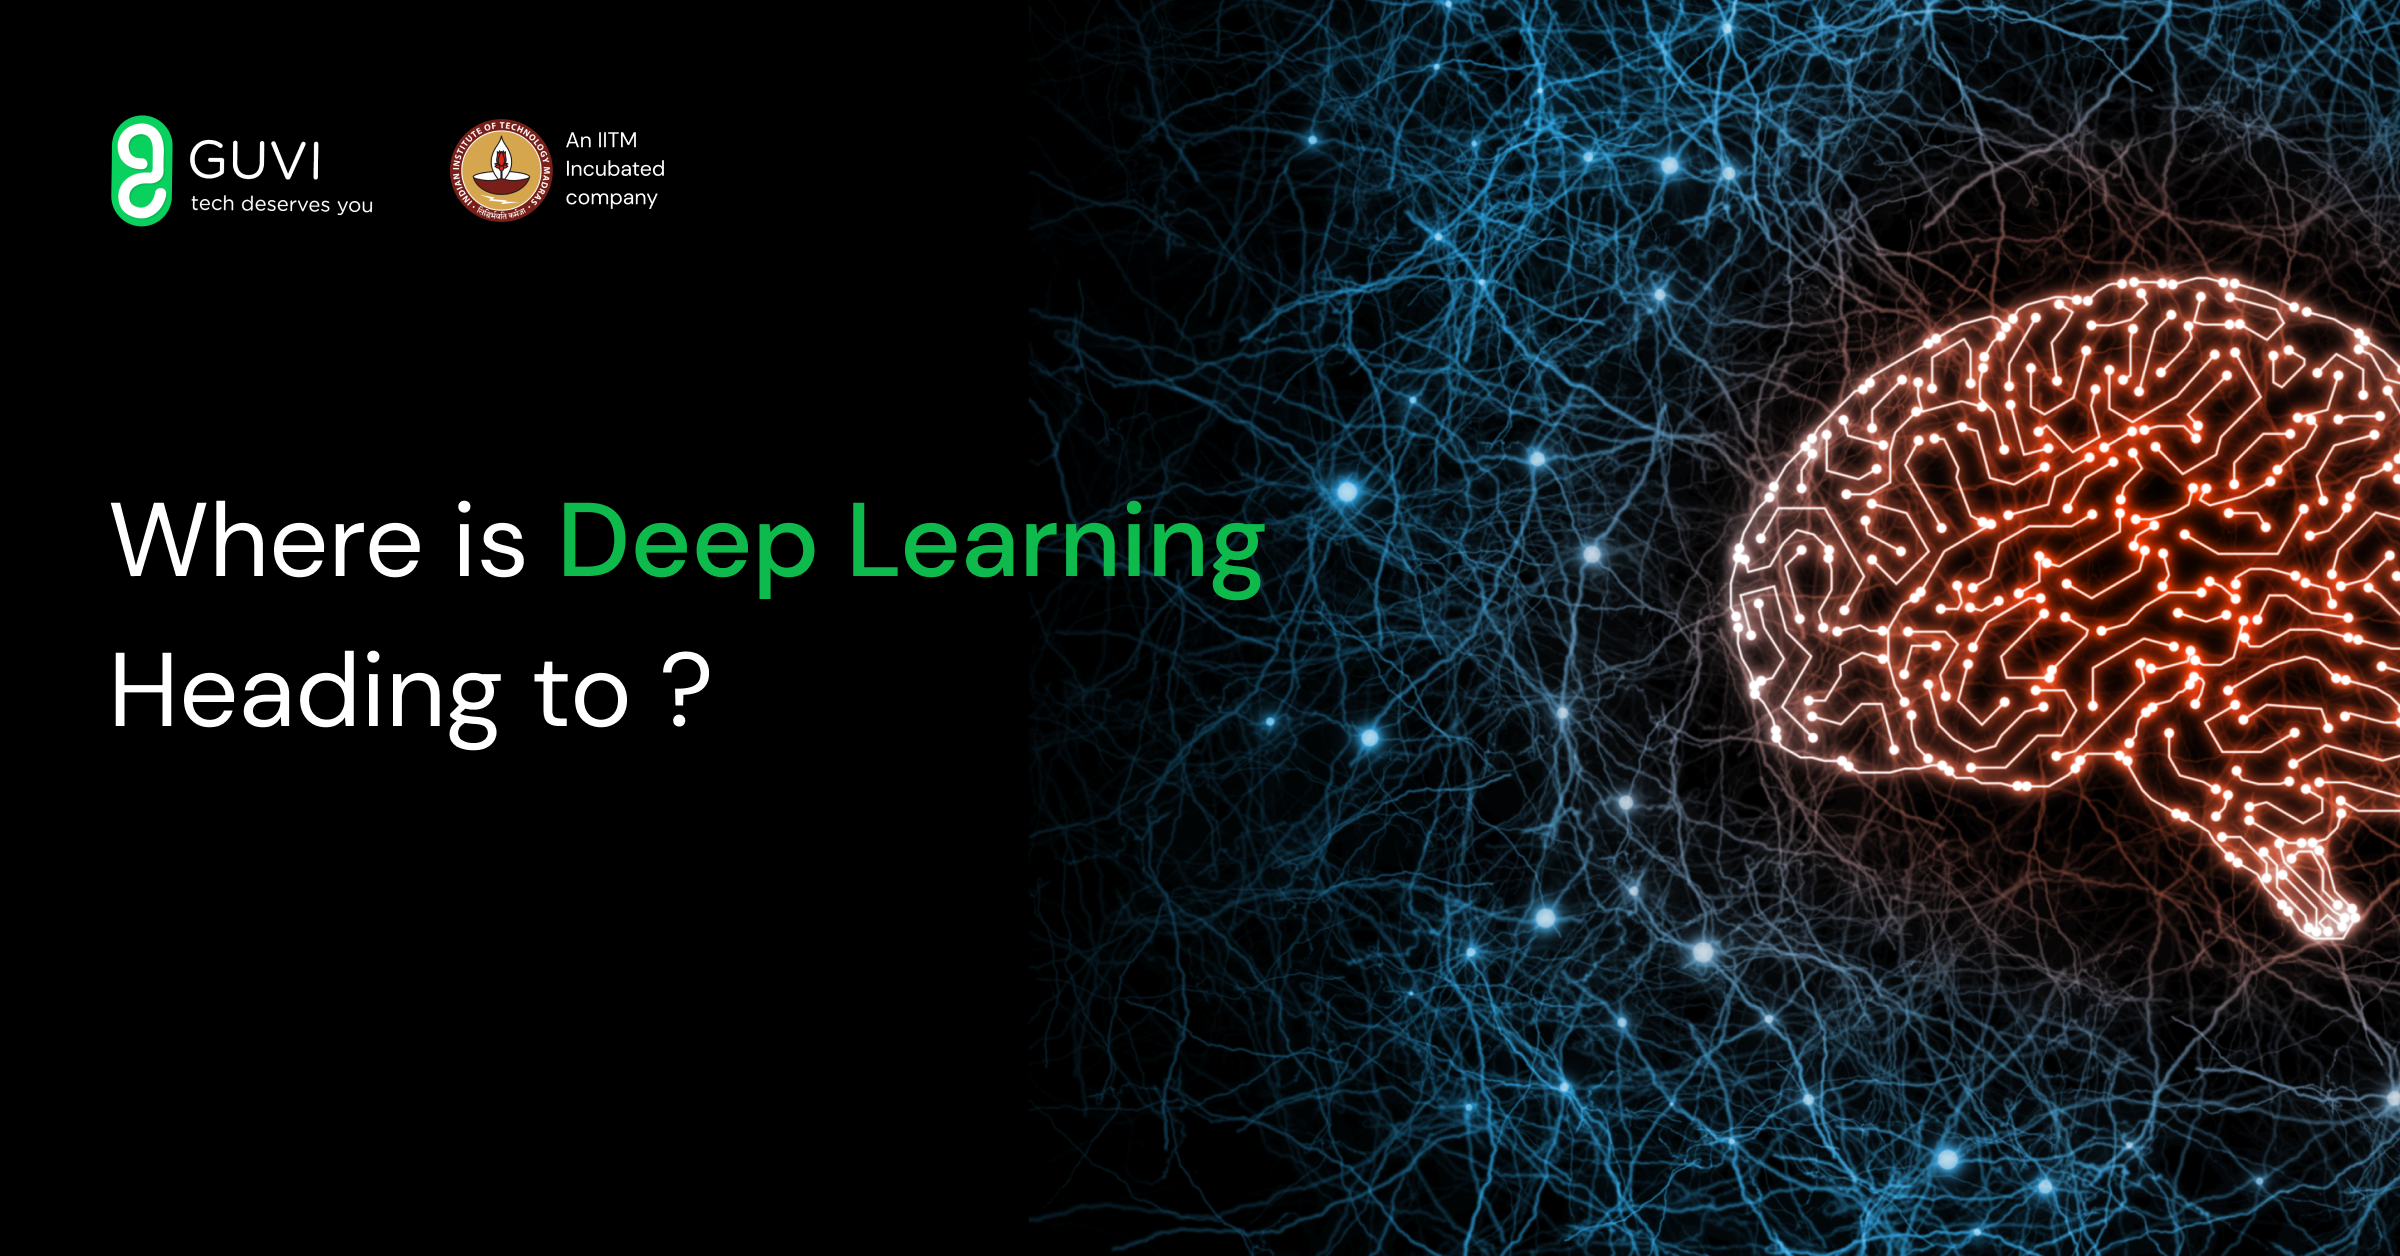 Deep learning